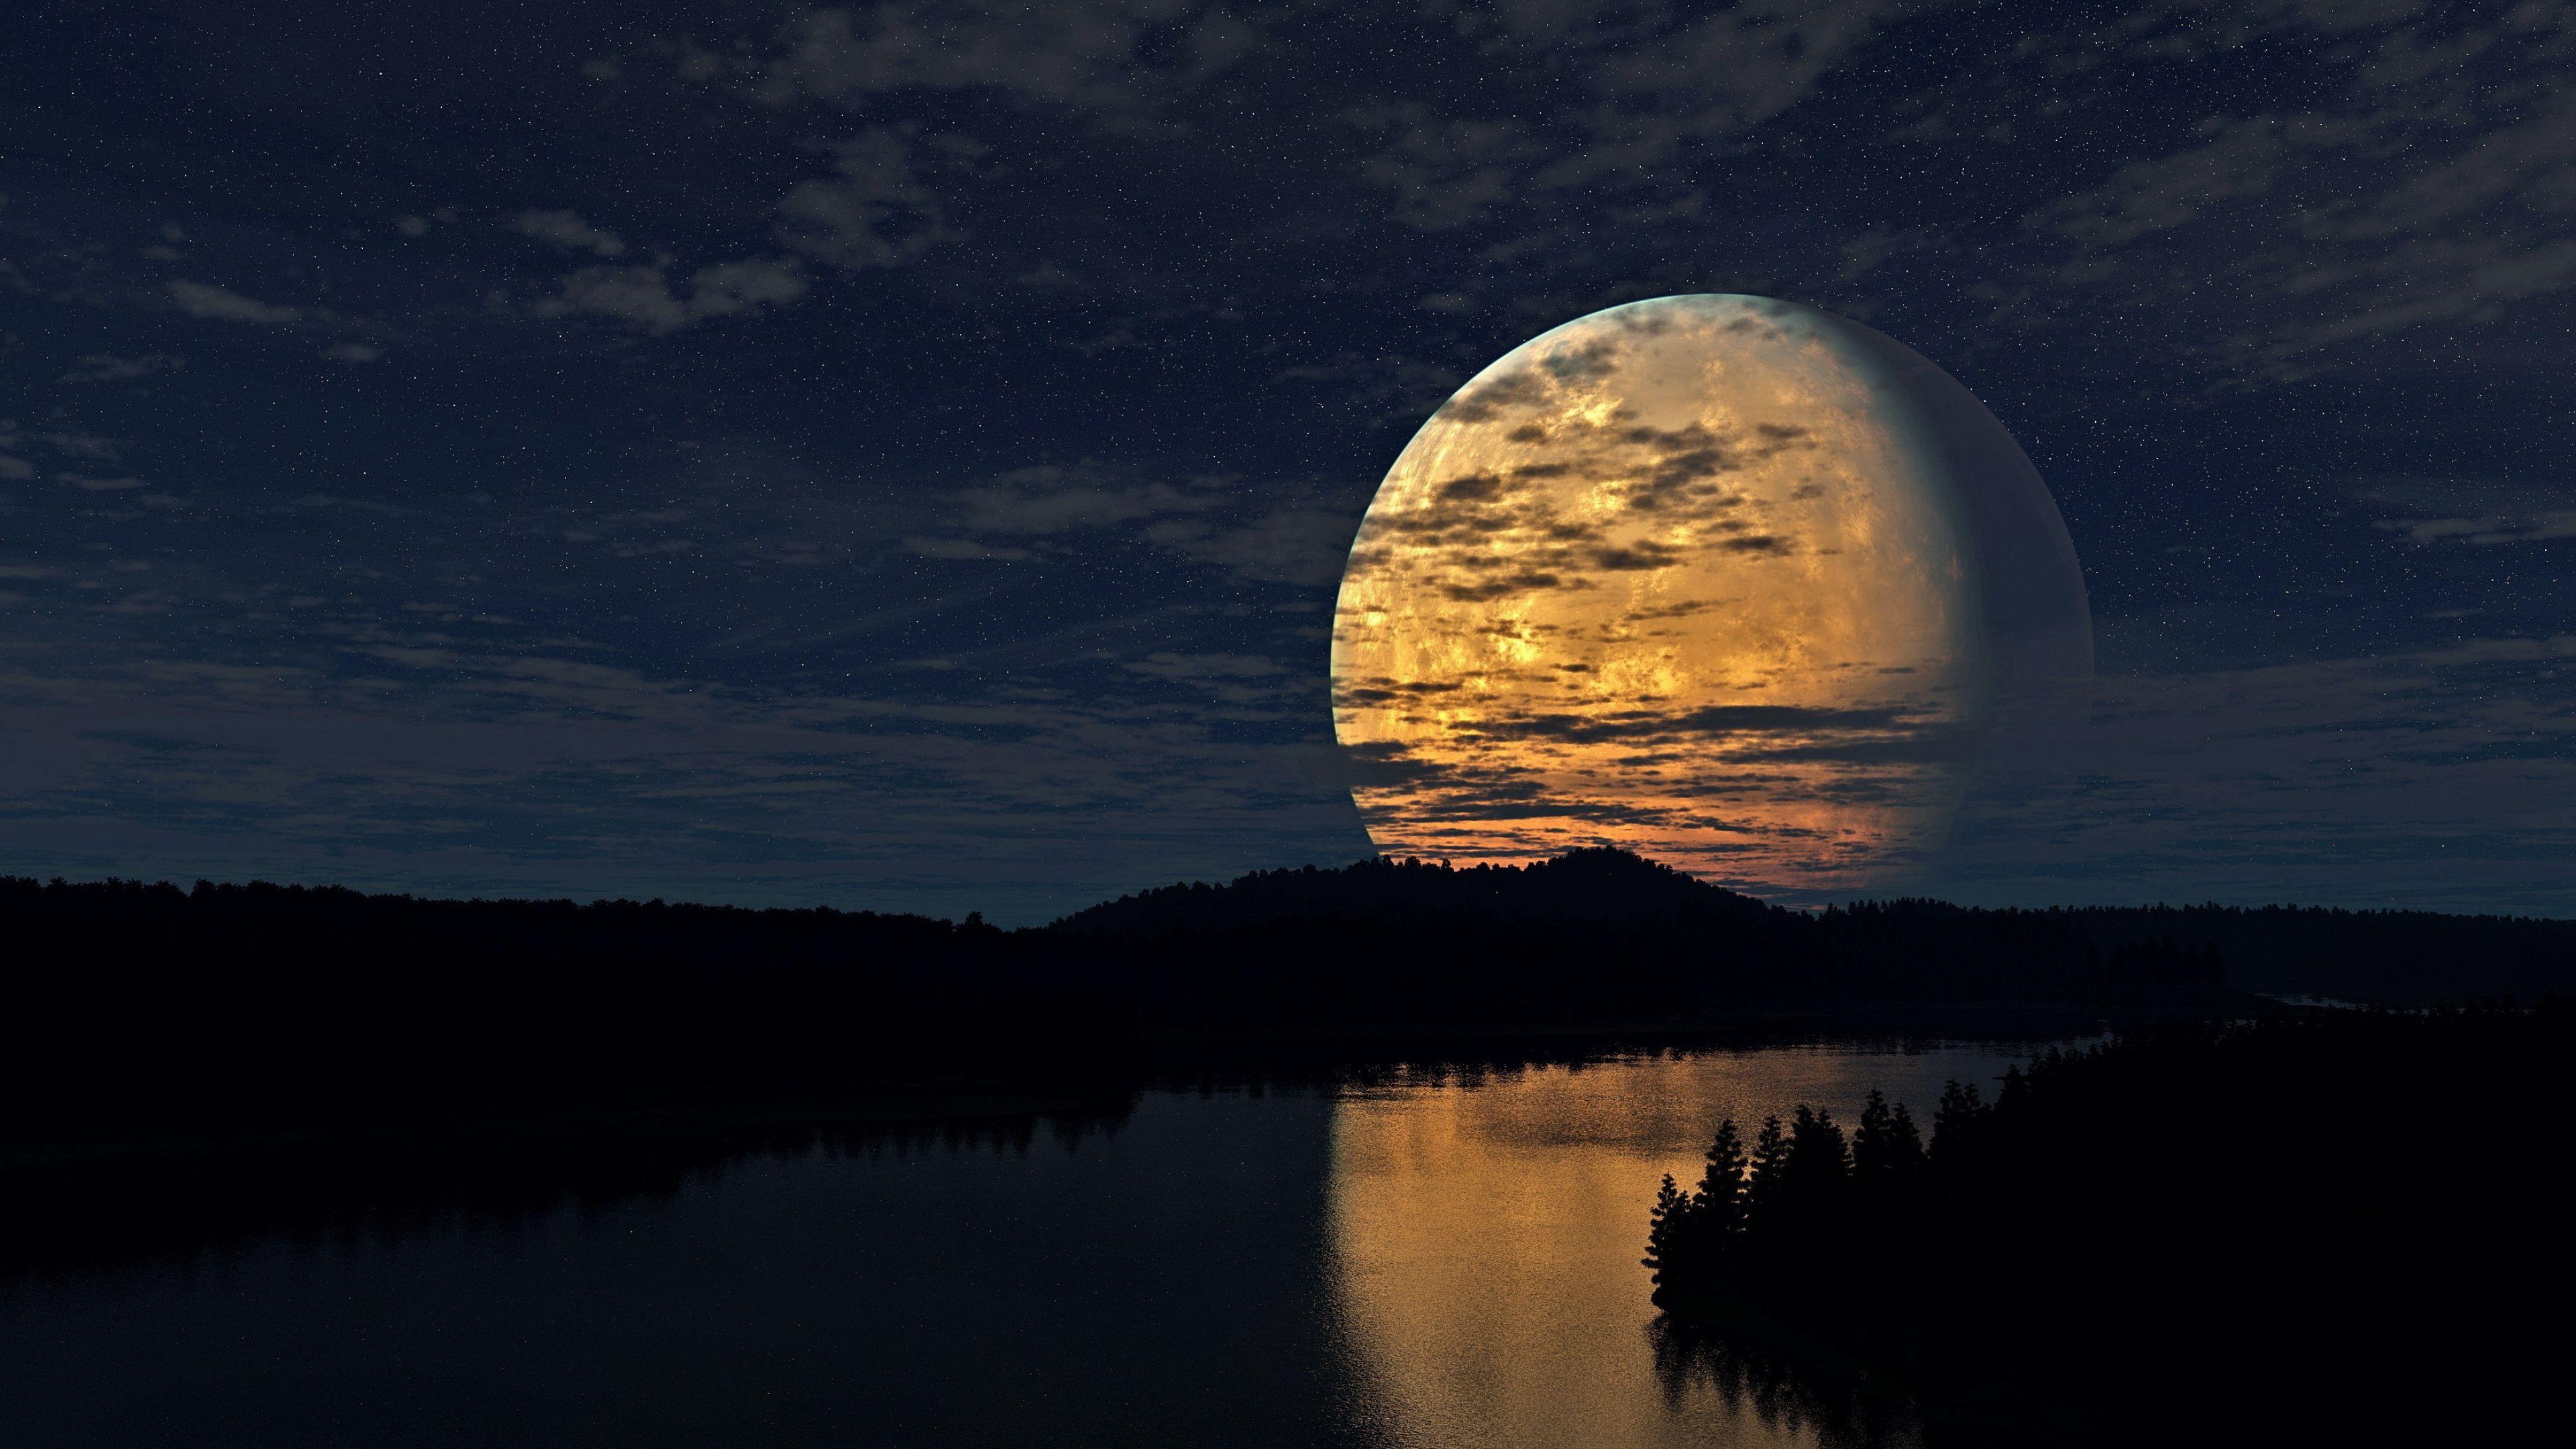 Nature fantasy landscape reflected in lake at night 2K wallpaper download